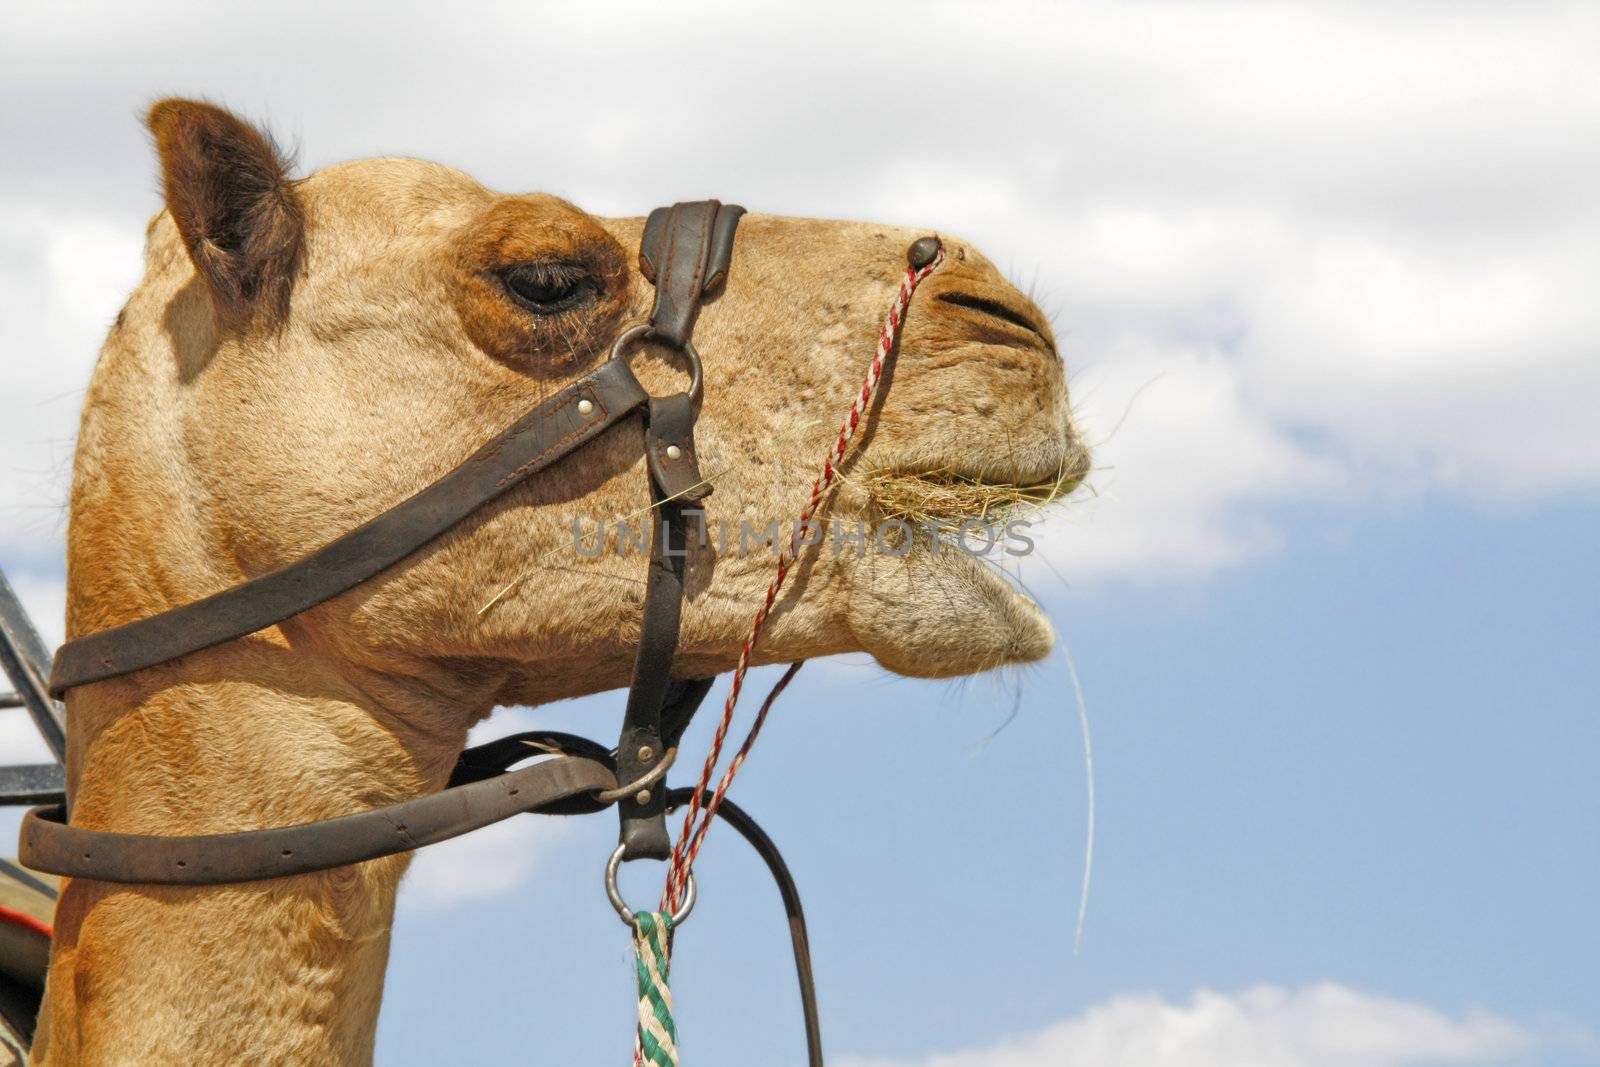 Camel Caravan by ChrisAlleaume